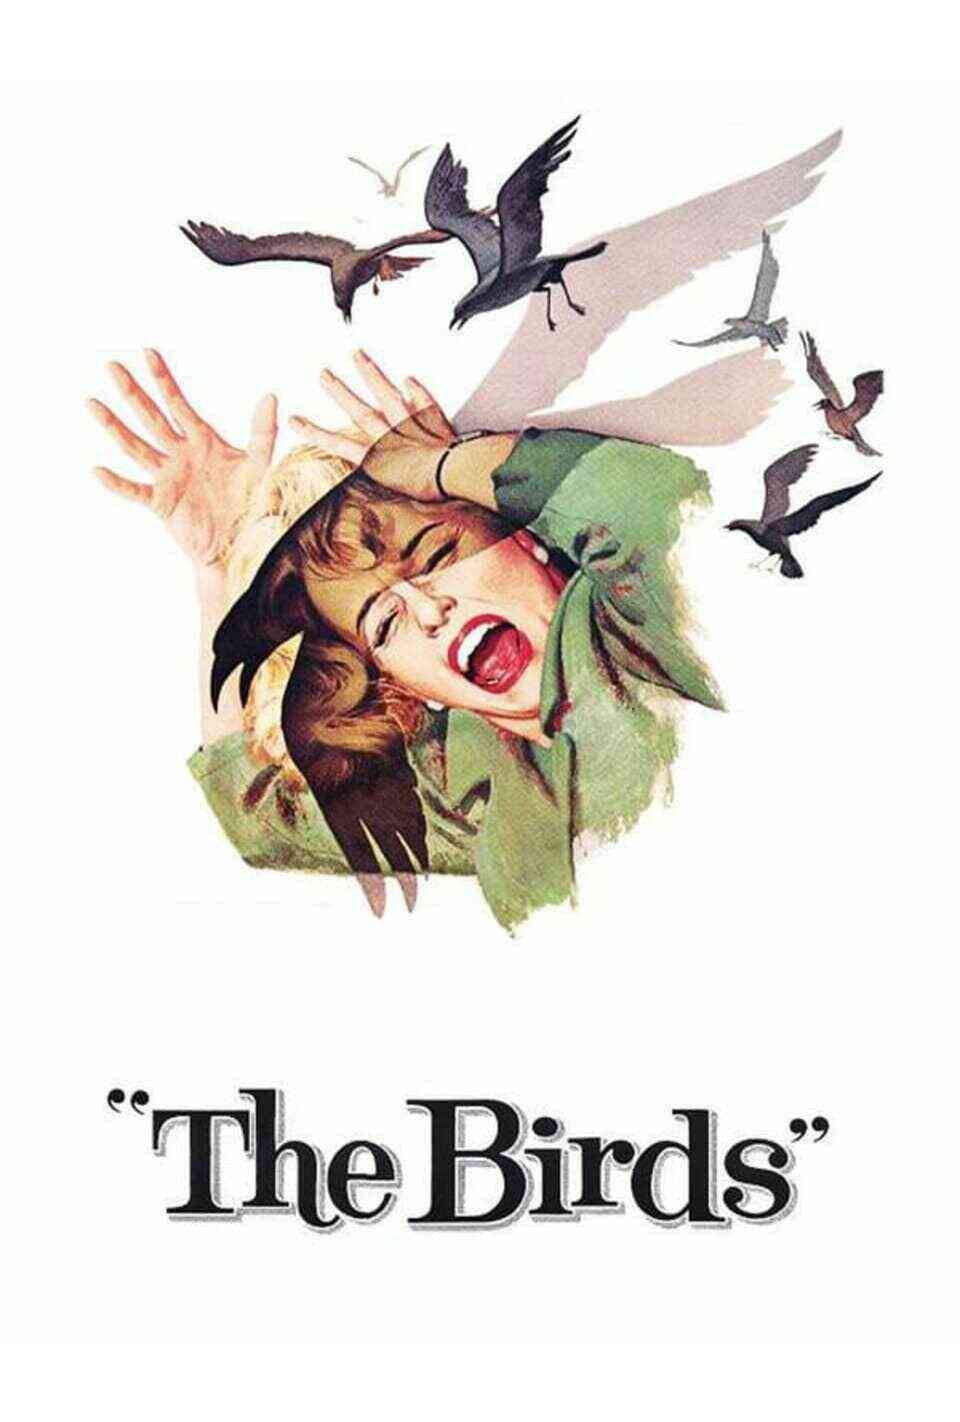 Read The Birds screenplay.